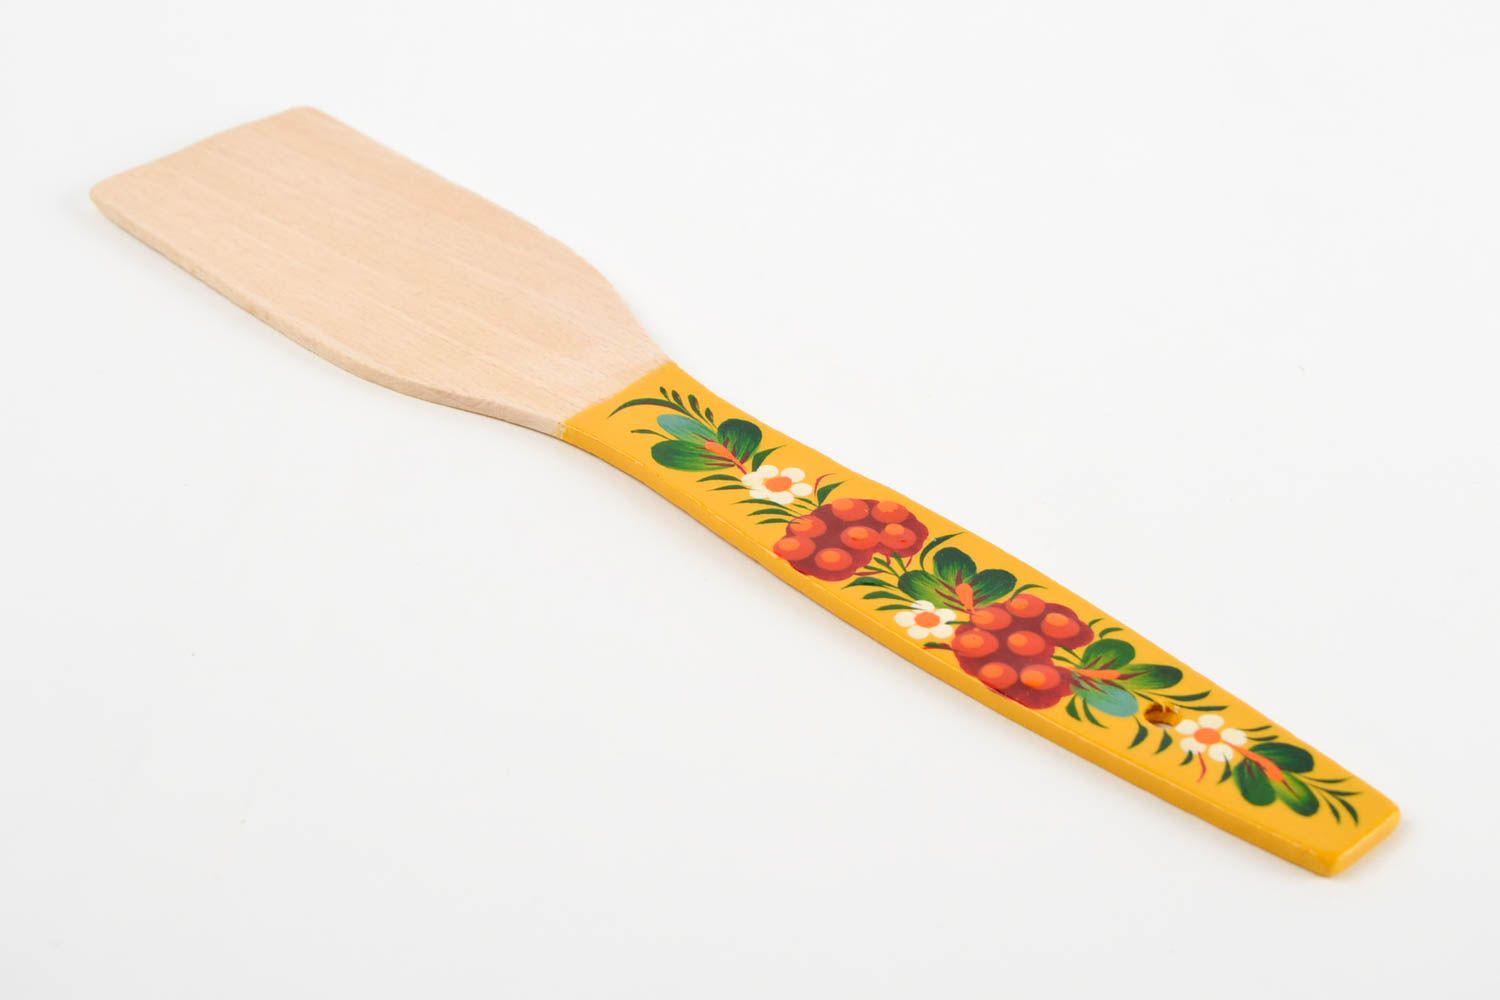 Handmade spatula wooden spatula for kitchen decor ideas unusual gift for women photo 4